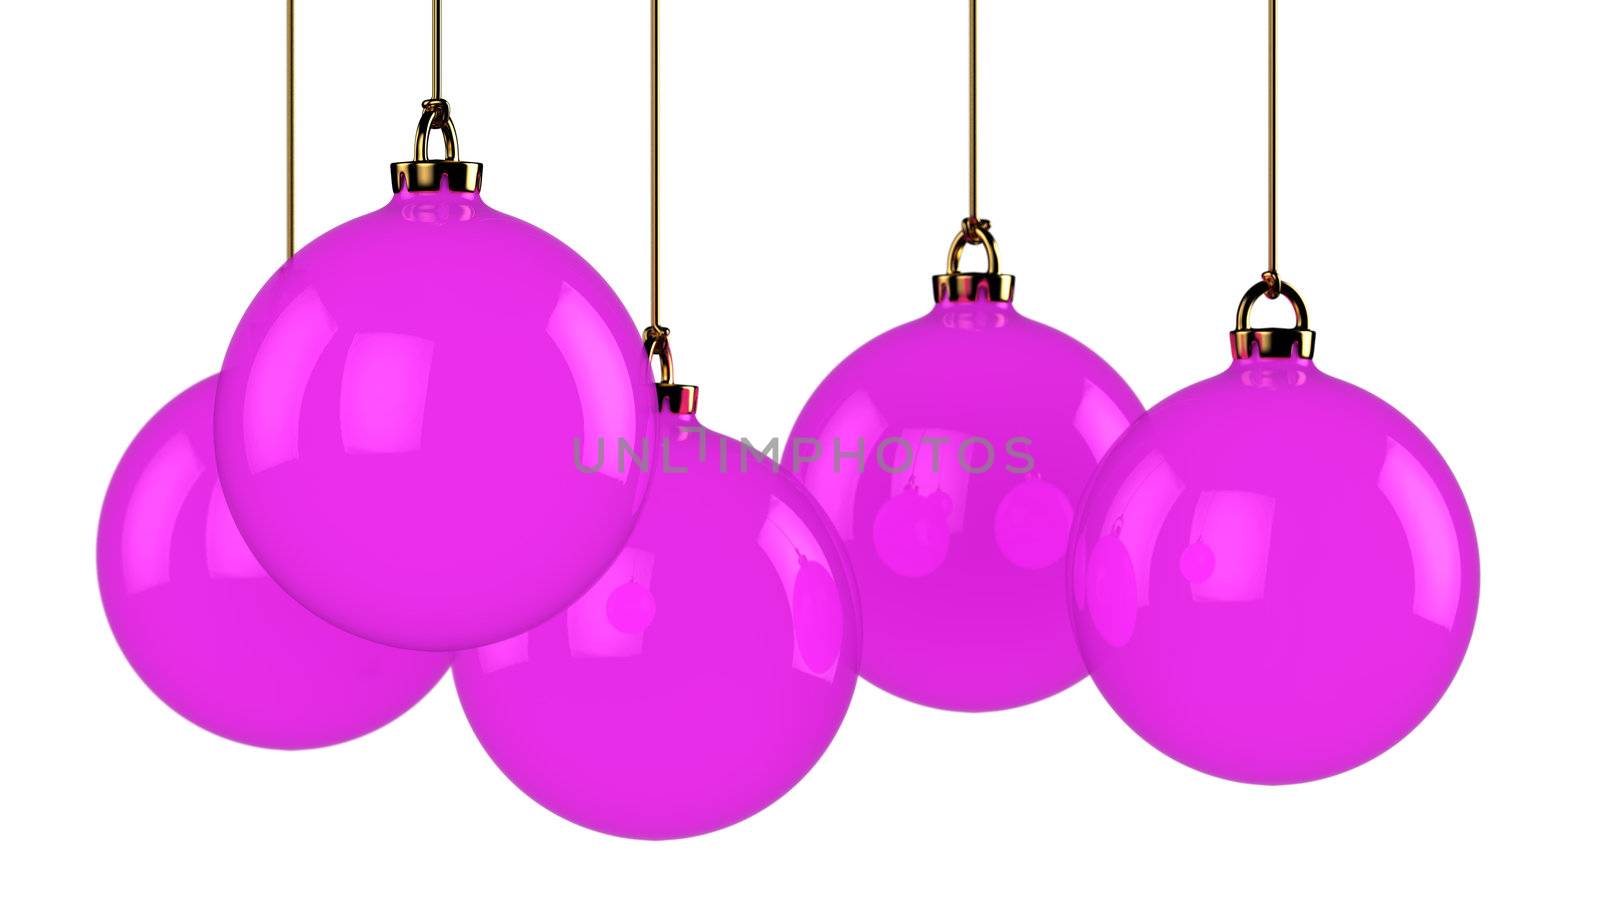 Purple balls by timbrk